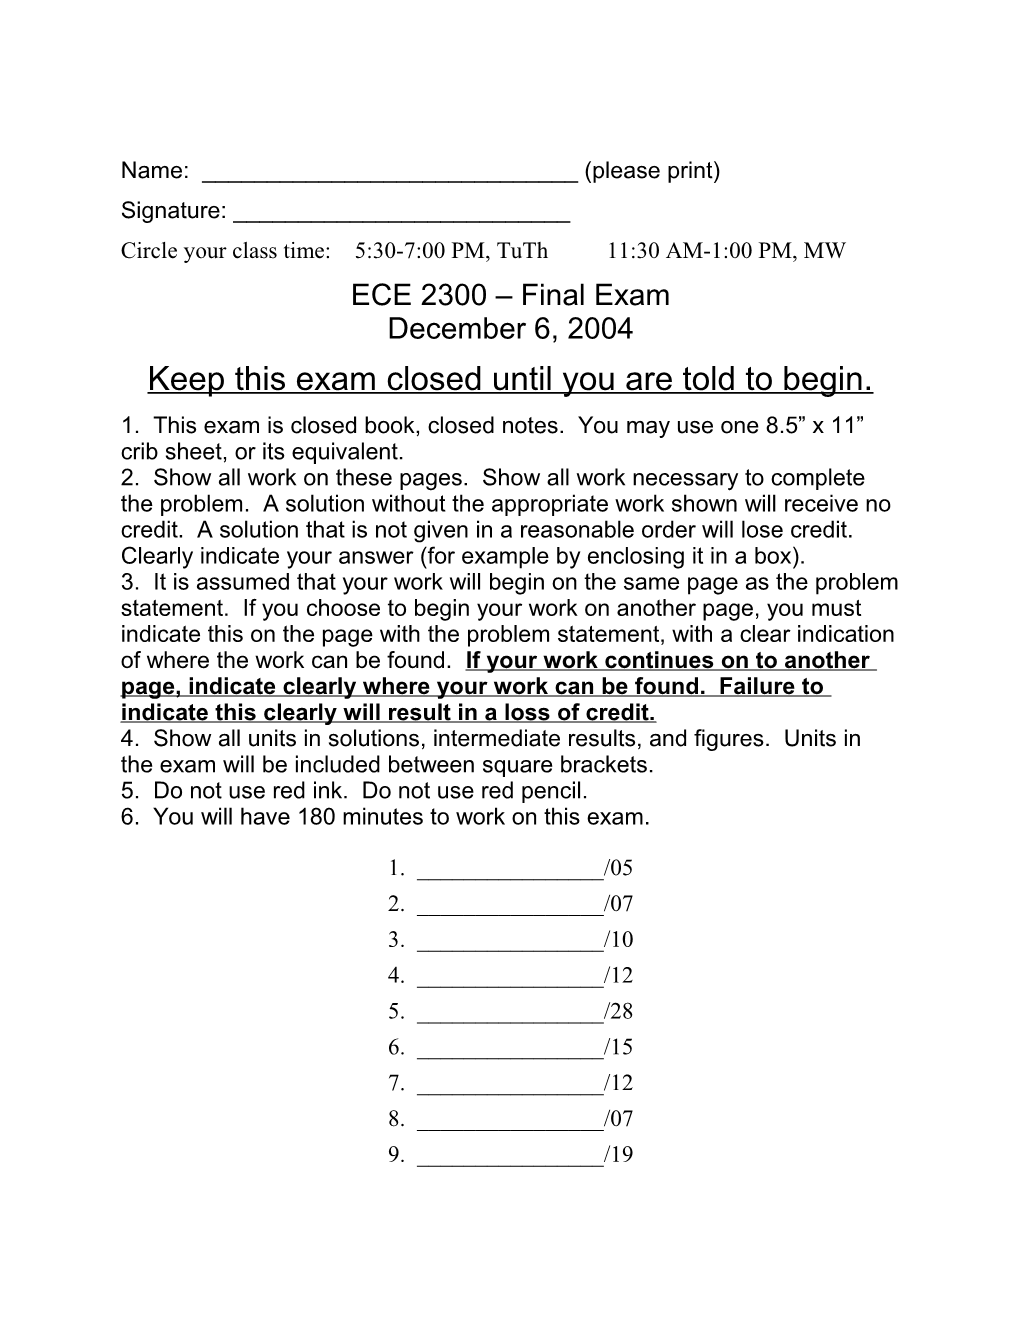 ECE 2300 Final Exam December 6, 2004 Page 1